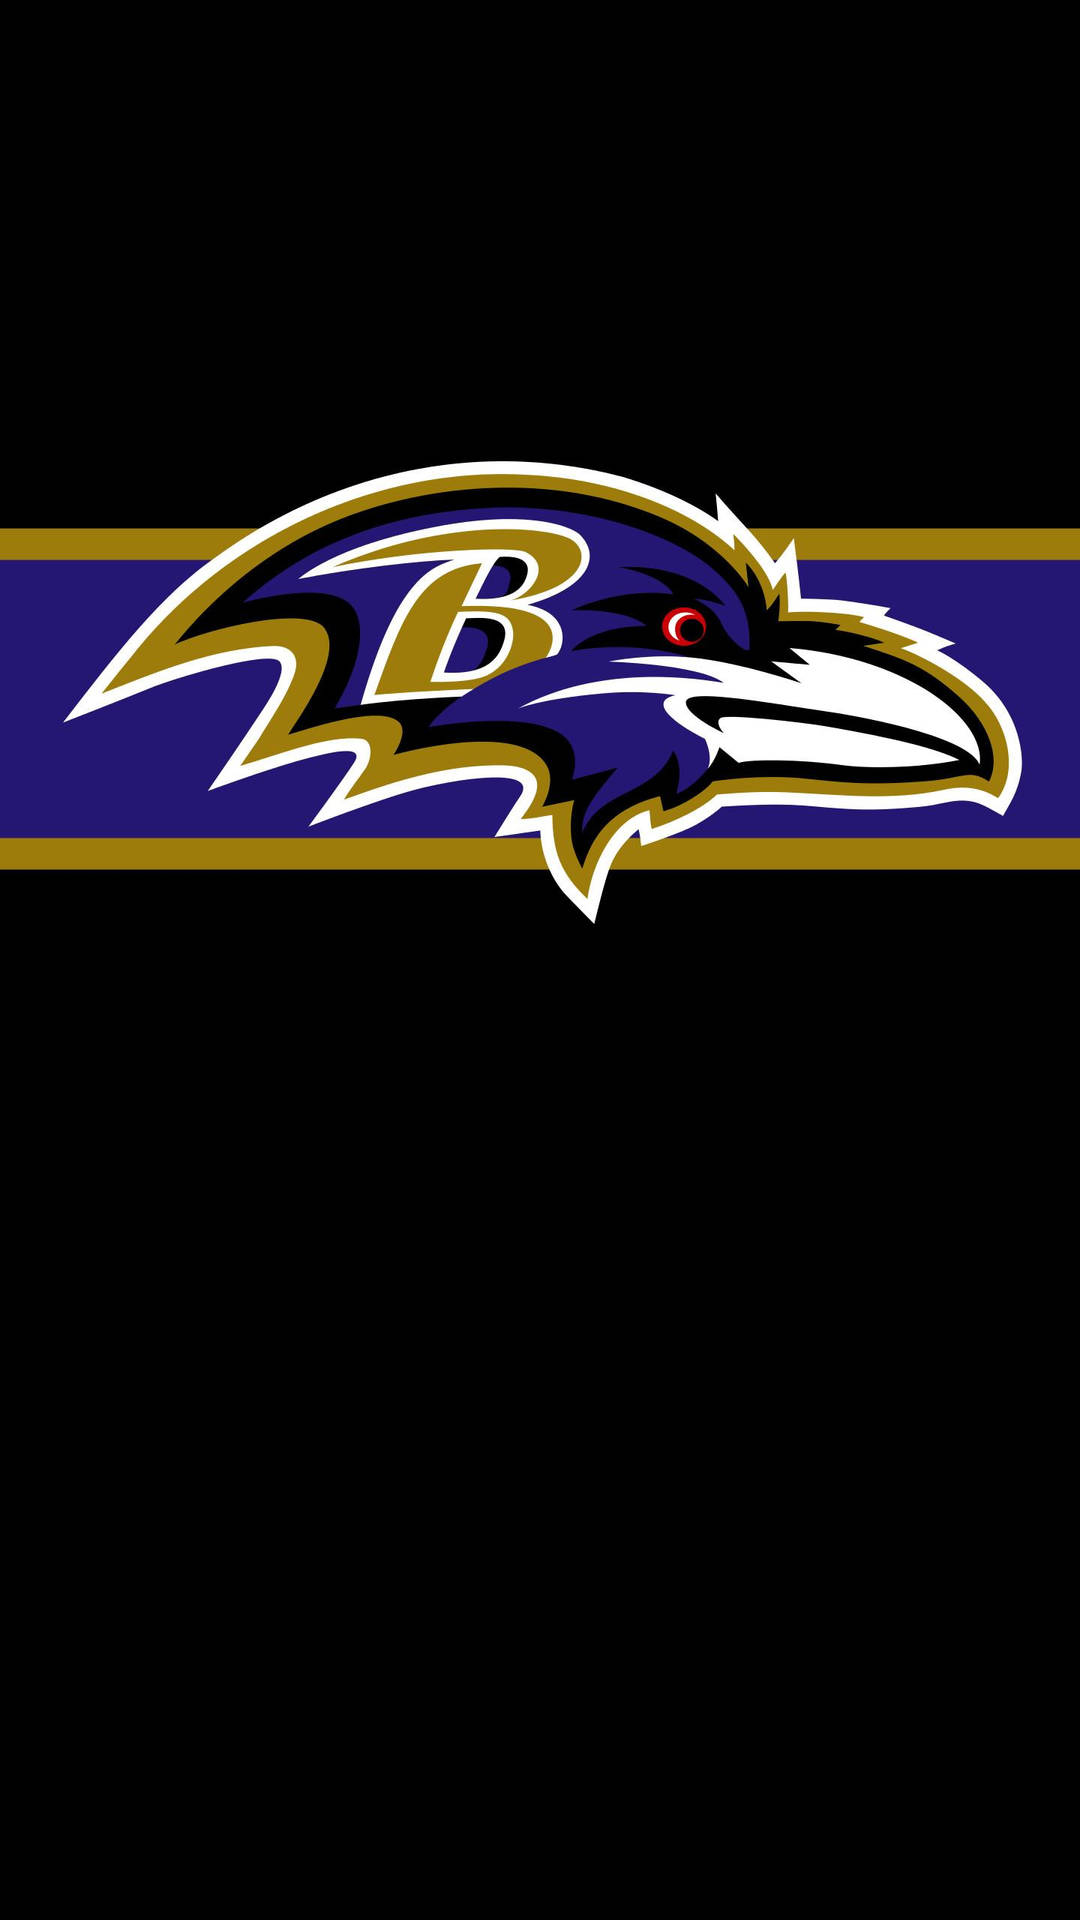 Get the official Baltimore Ravens iPhone Wallpaper Wallpaper